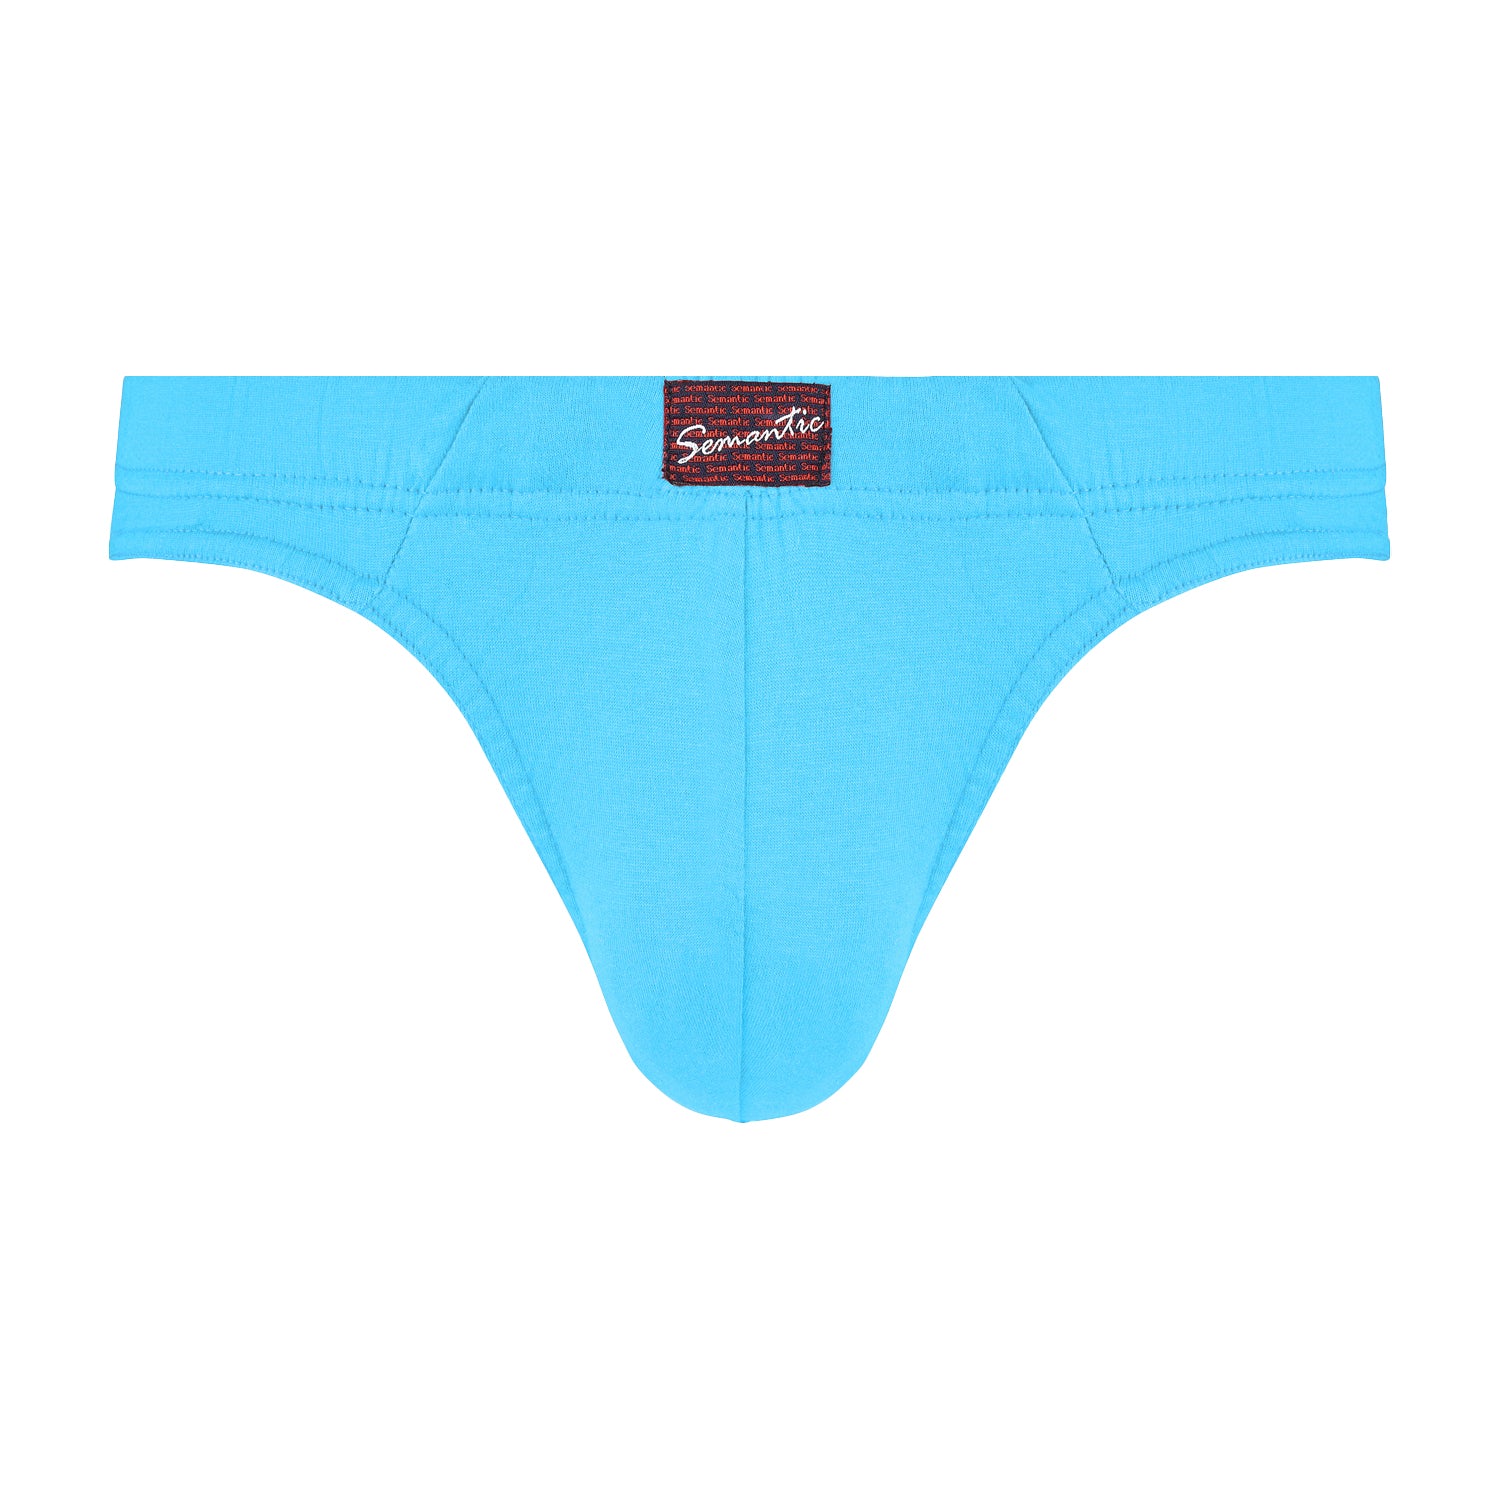 Catman underwear men's seamless briefs, pure cotton, breathable,  comfortable, non-restrictive, simple mid-rise solid color